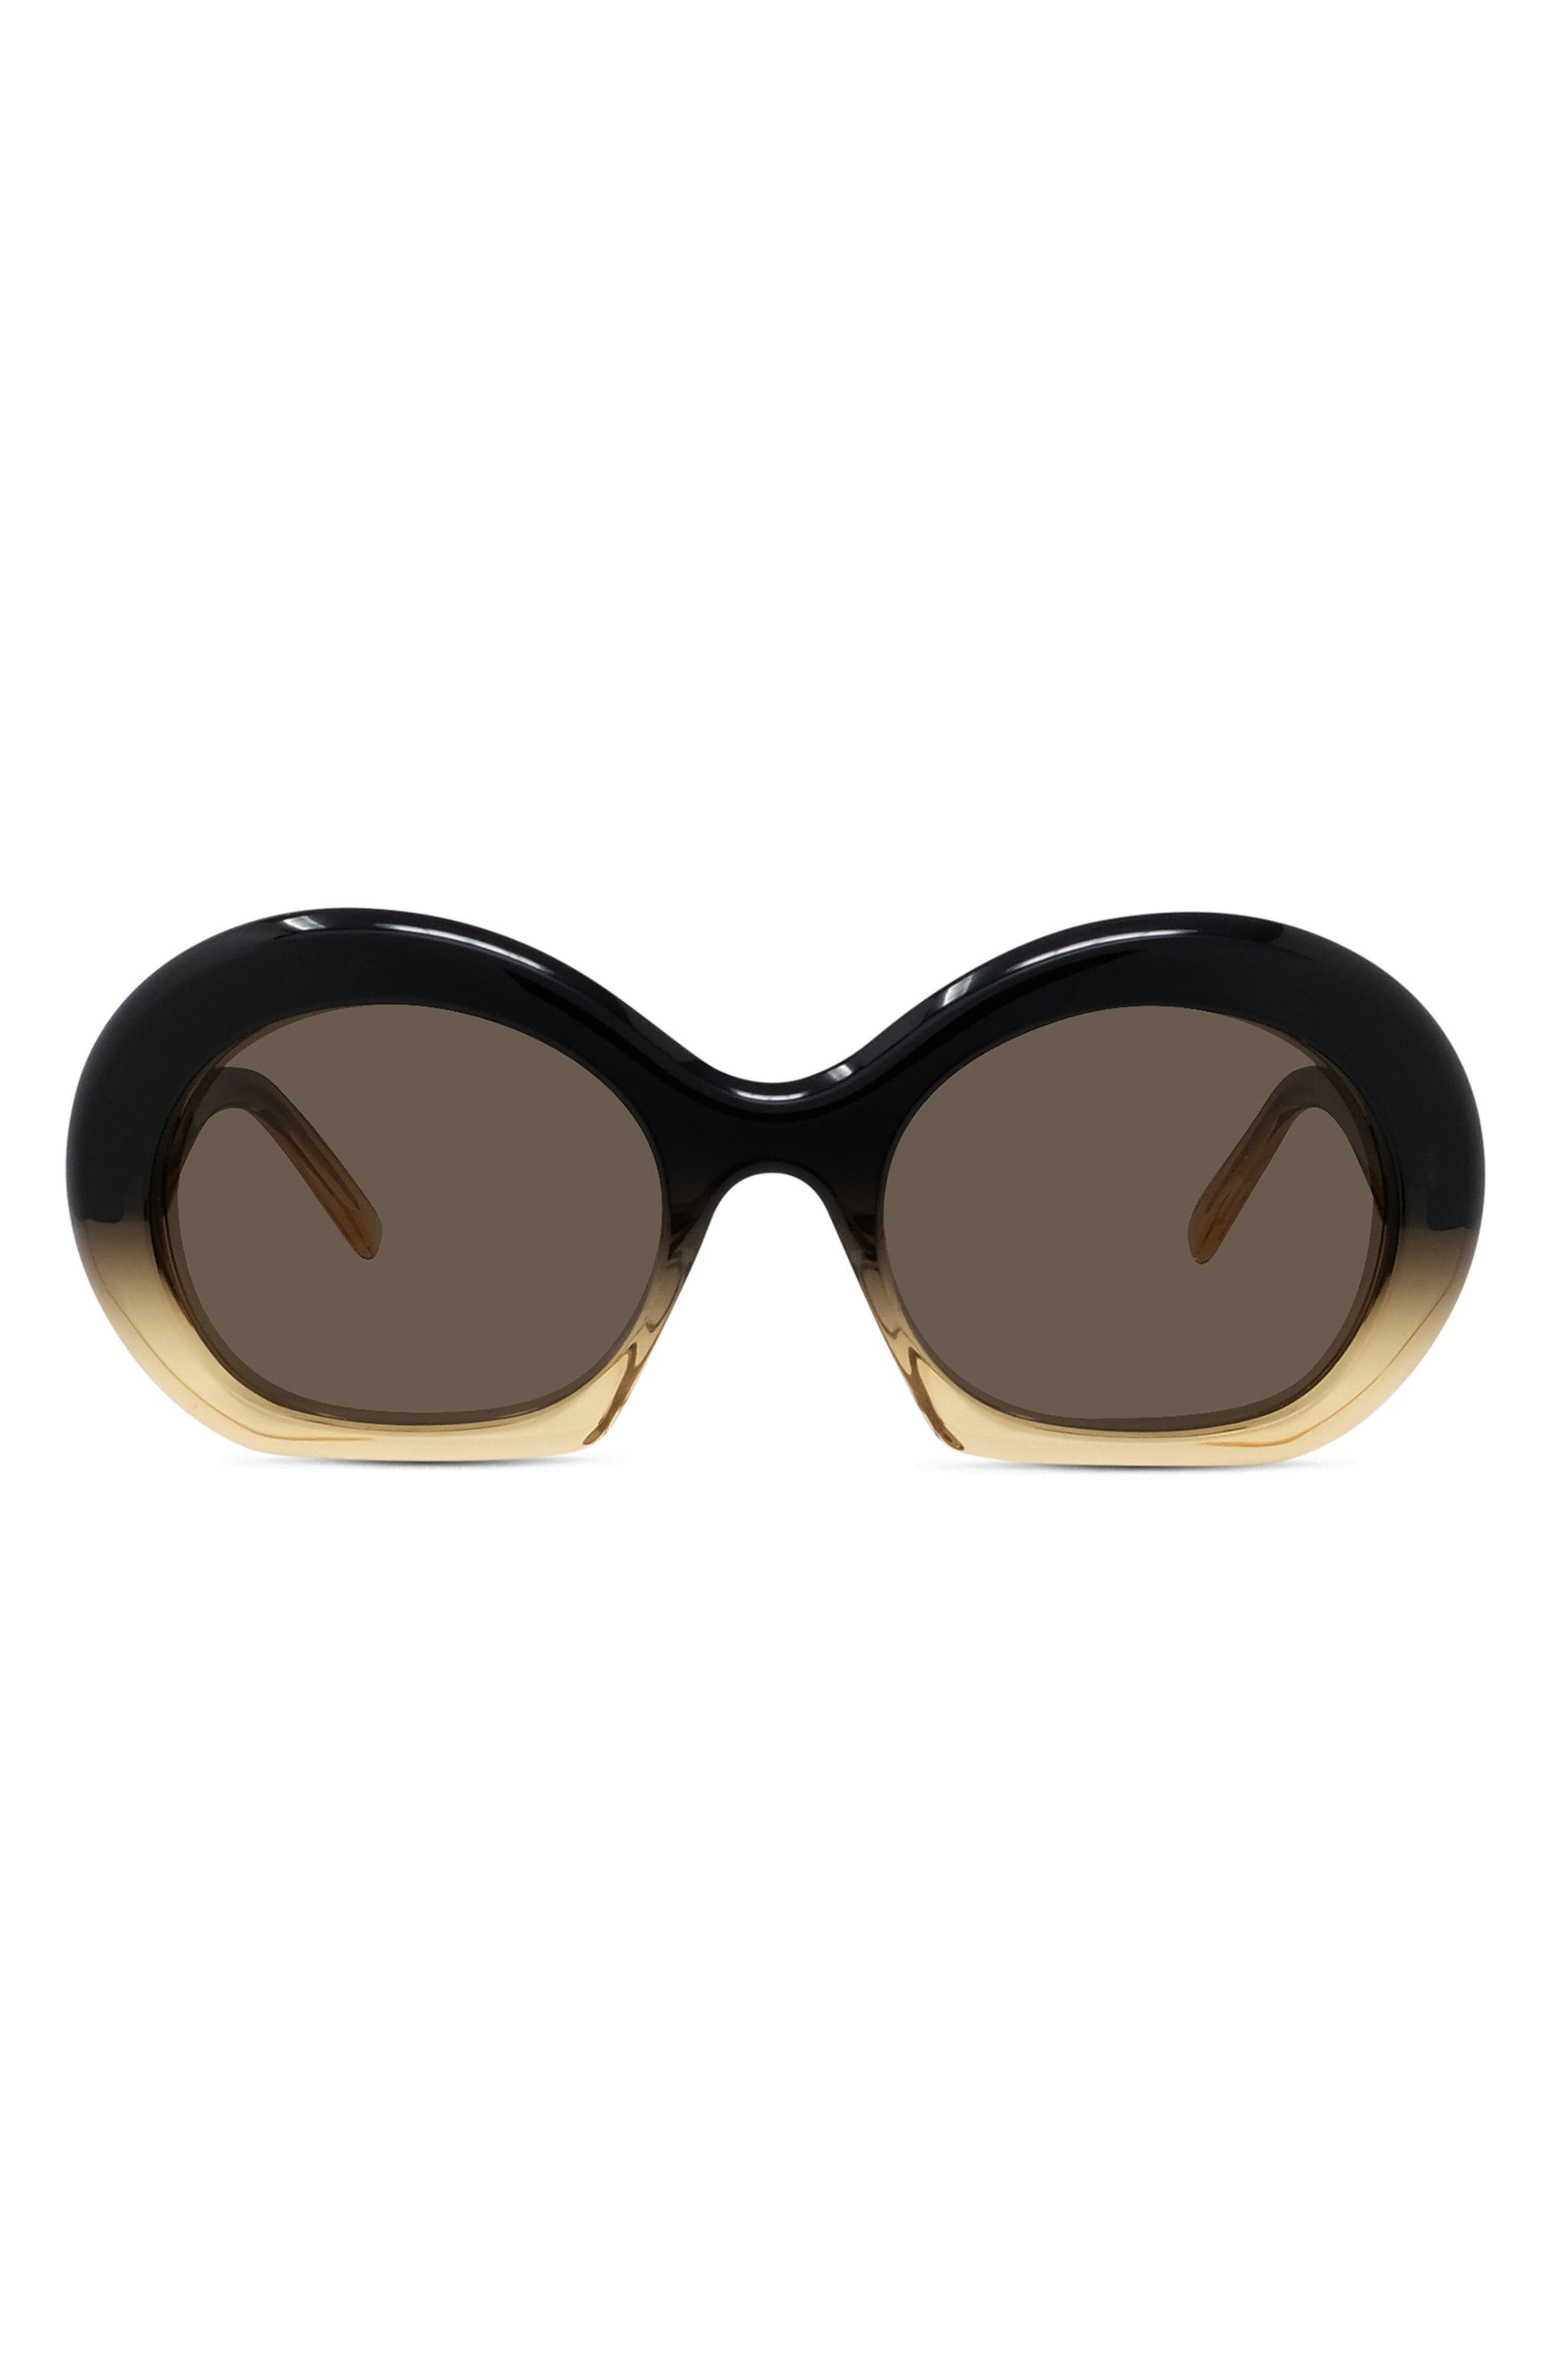 Loewe 54mm Round Sunglasses in Dark Brown/Other /Brown at Nordstrom